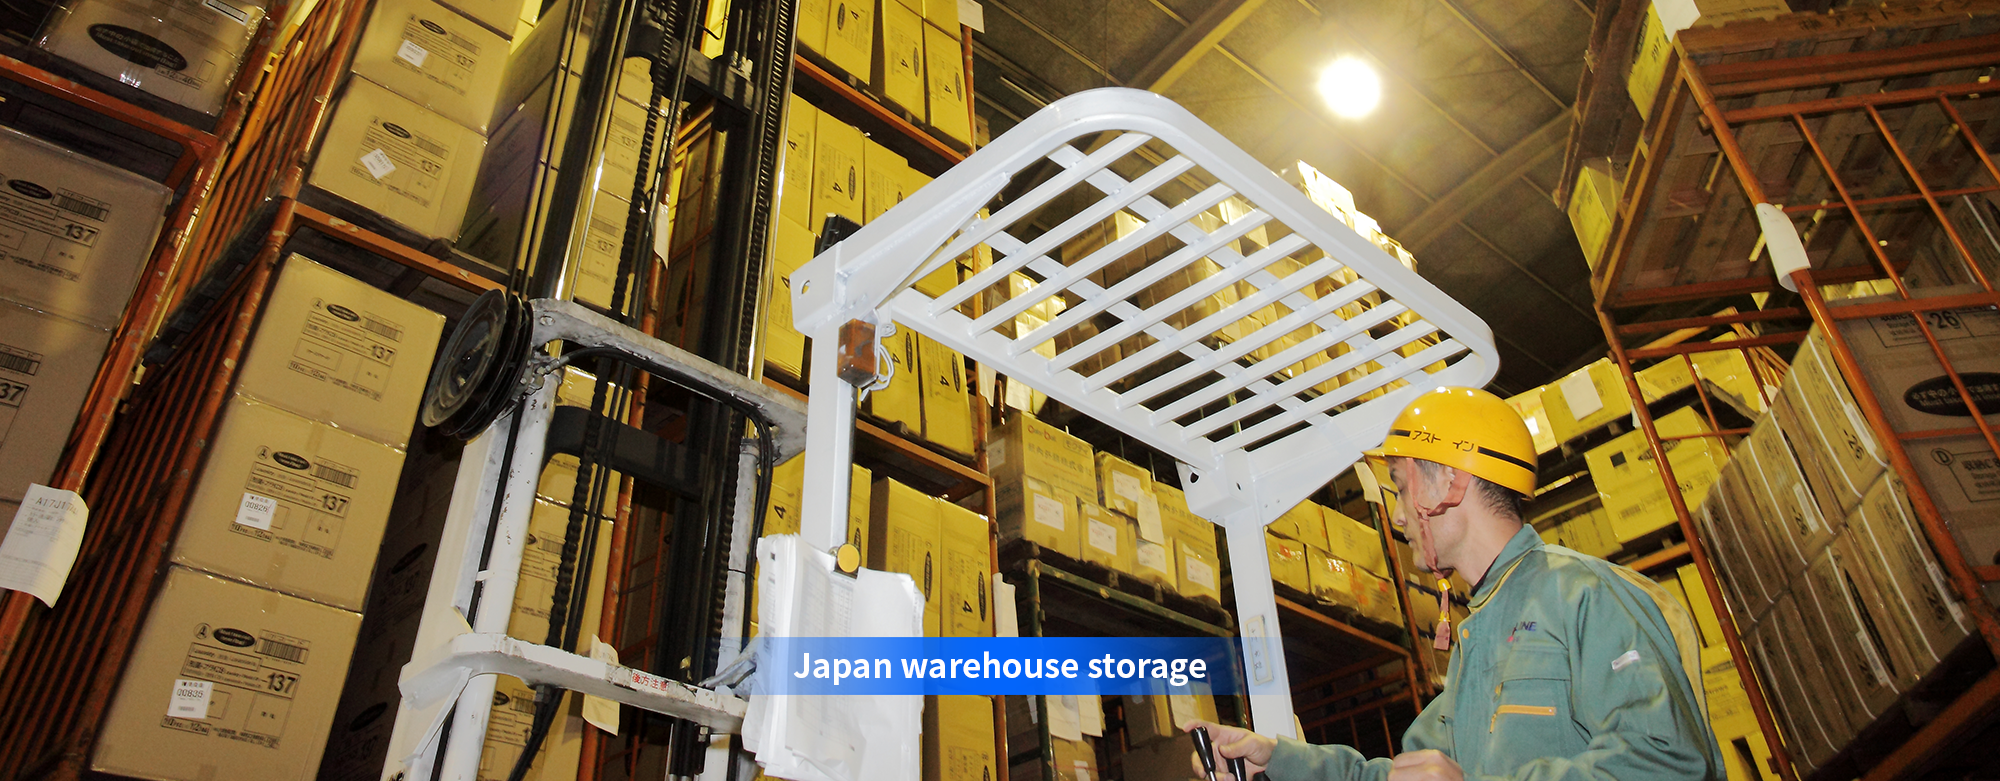 Japan warehouse storage